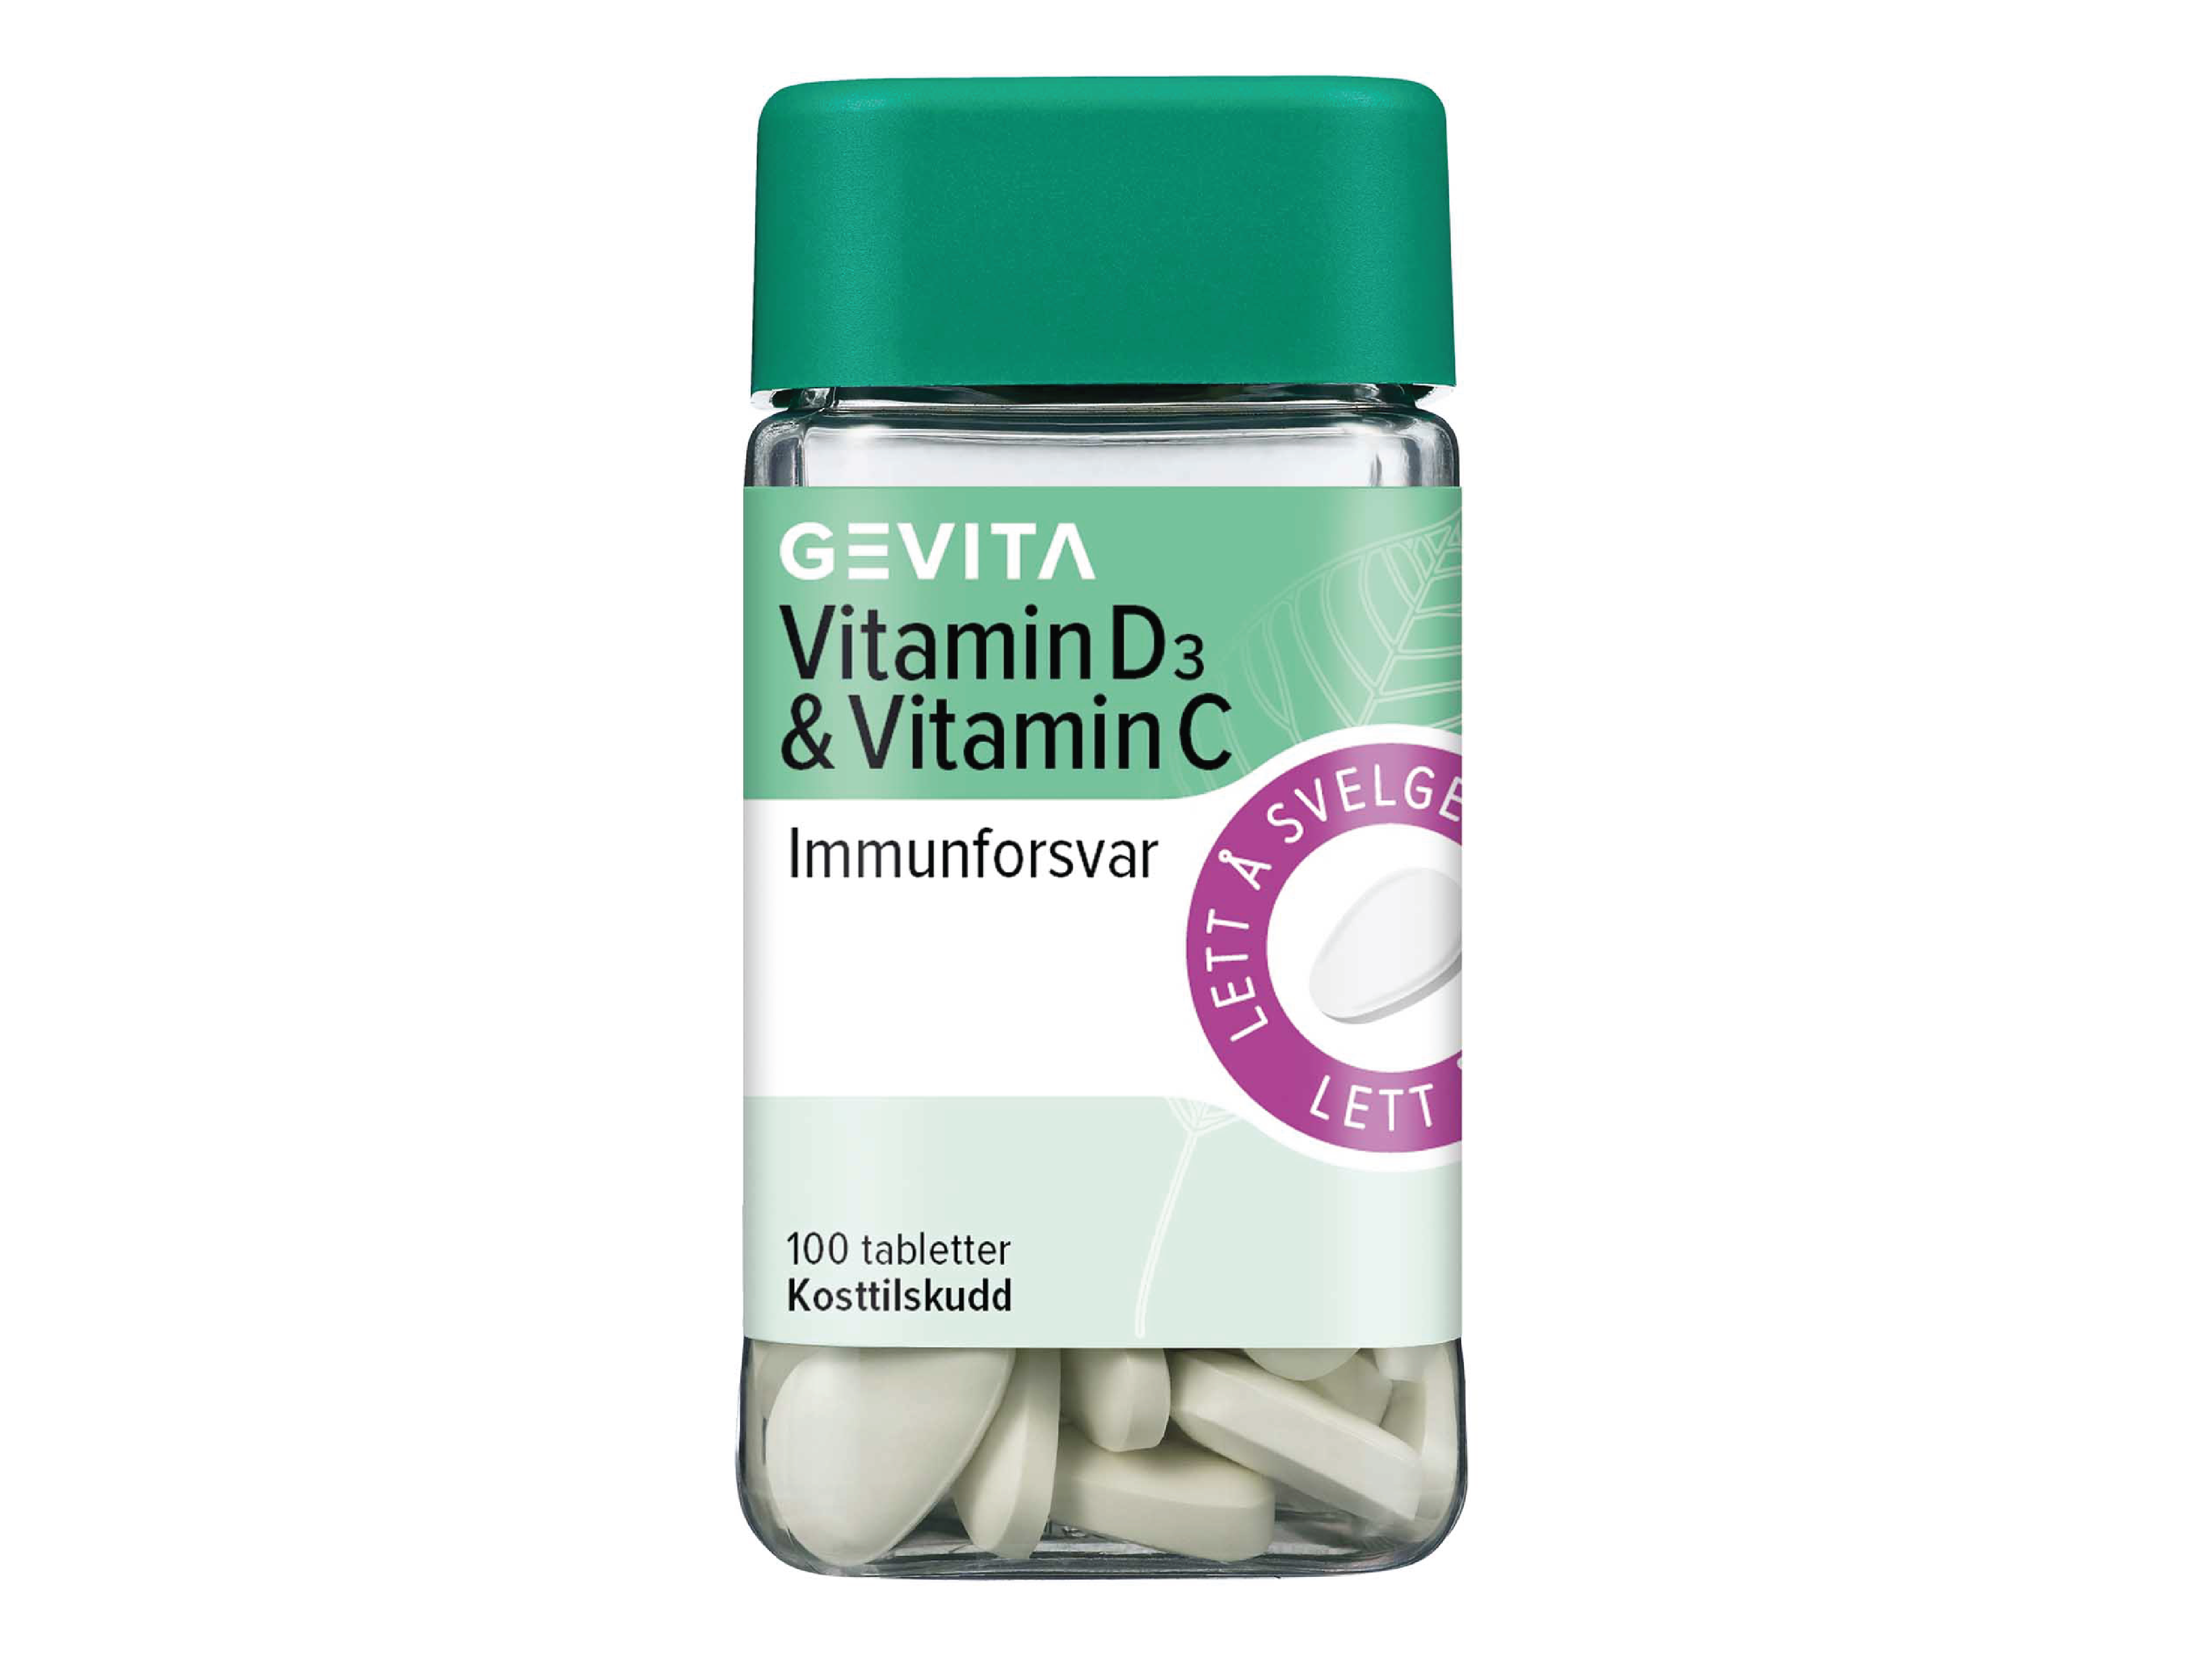 Gevita Vitamin D3 & Vitamin C, 100 tabletter